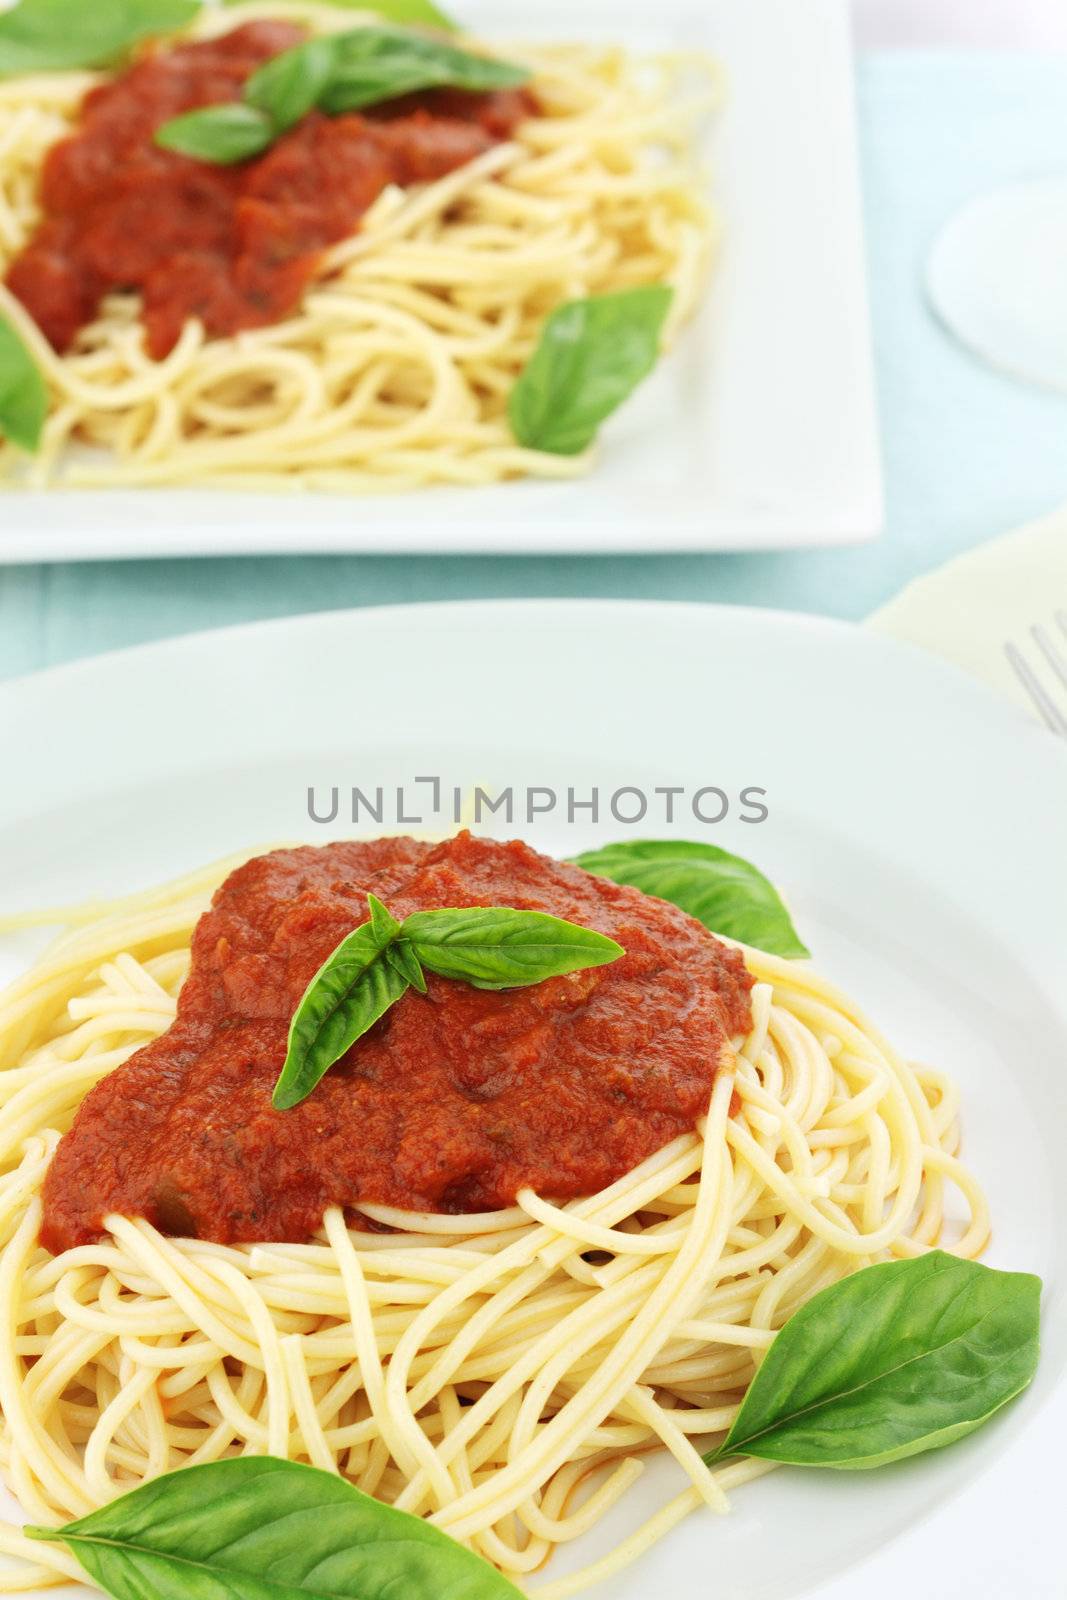 Pasta and Spaghetti Sauce by StephanieFrey